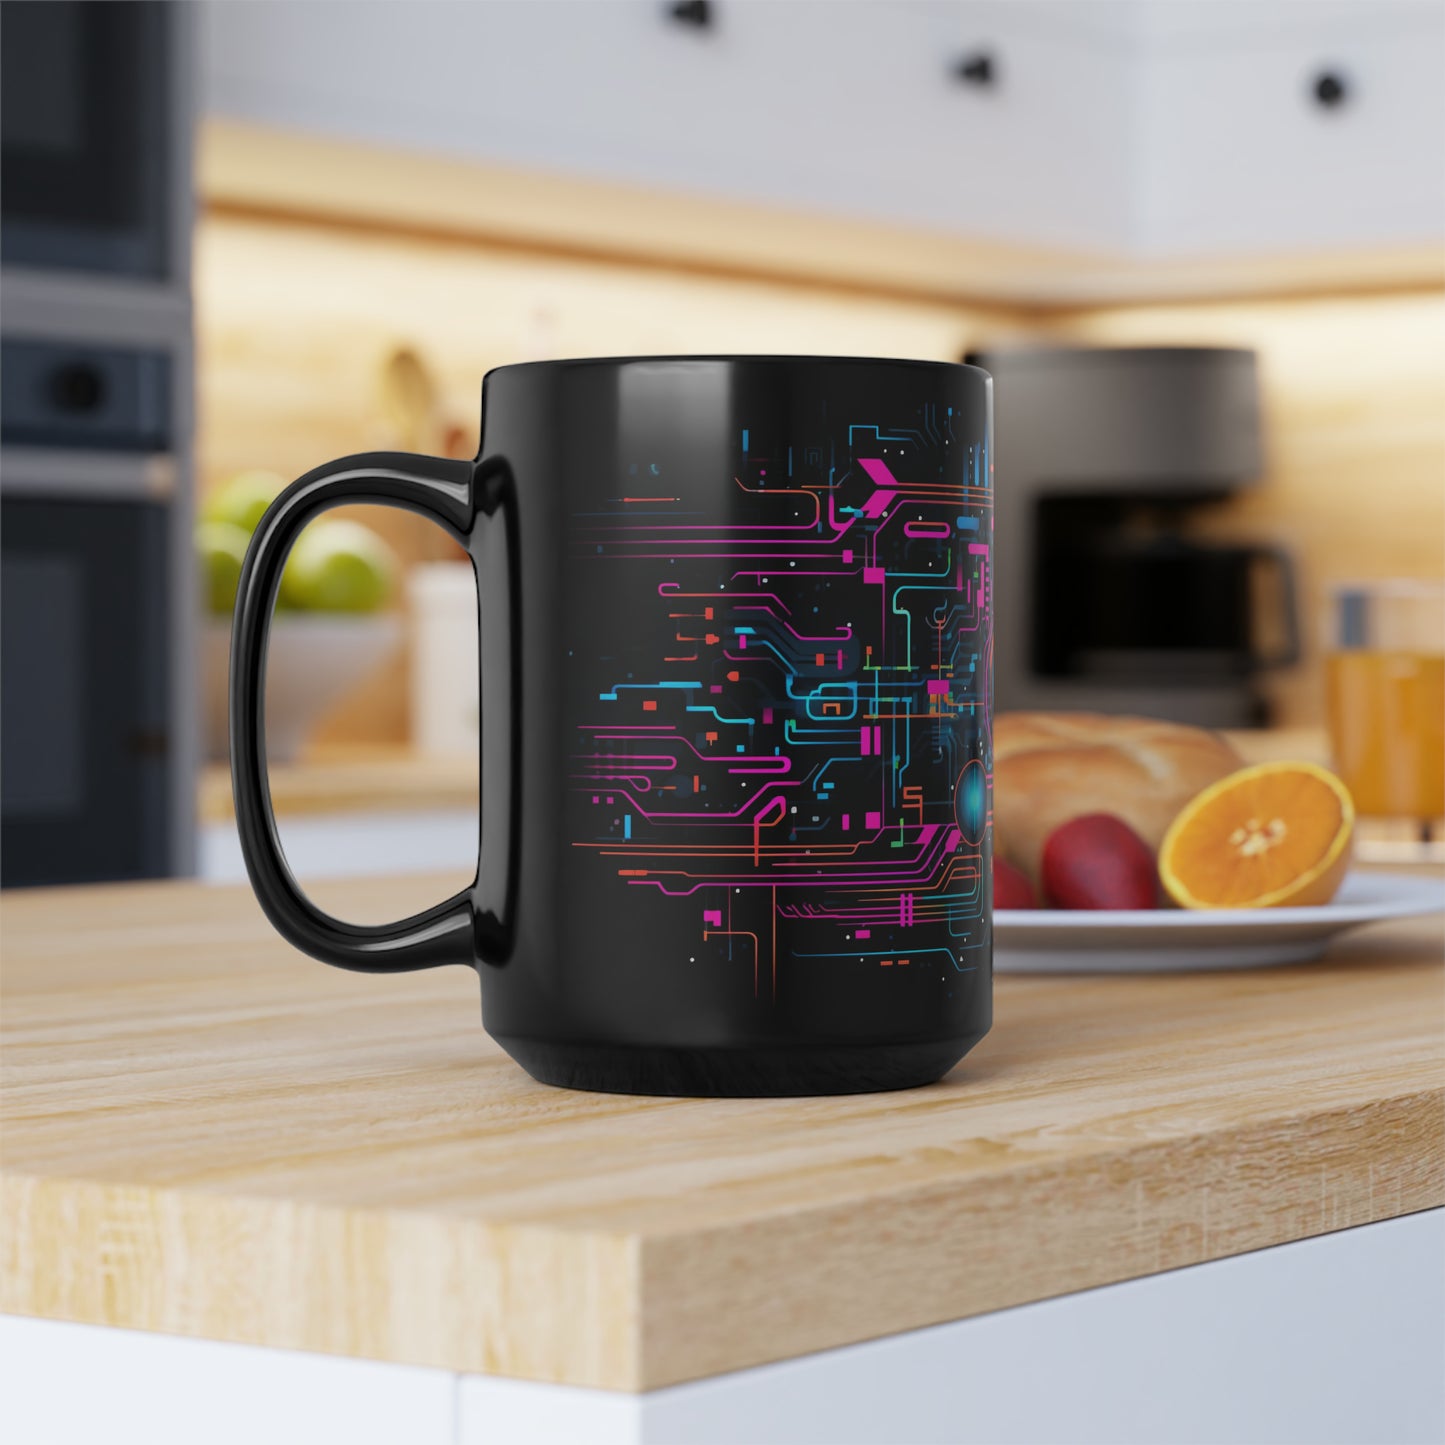 Cyberpunk Mug, Pink and Blue Circuit Board Ceramic Mug 15oz, Computer Gamer Mug, Tech Coffee Cup, Sci-Fi Tea Mug